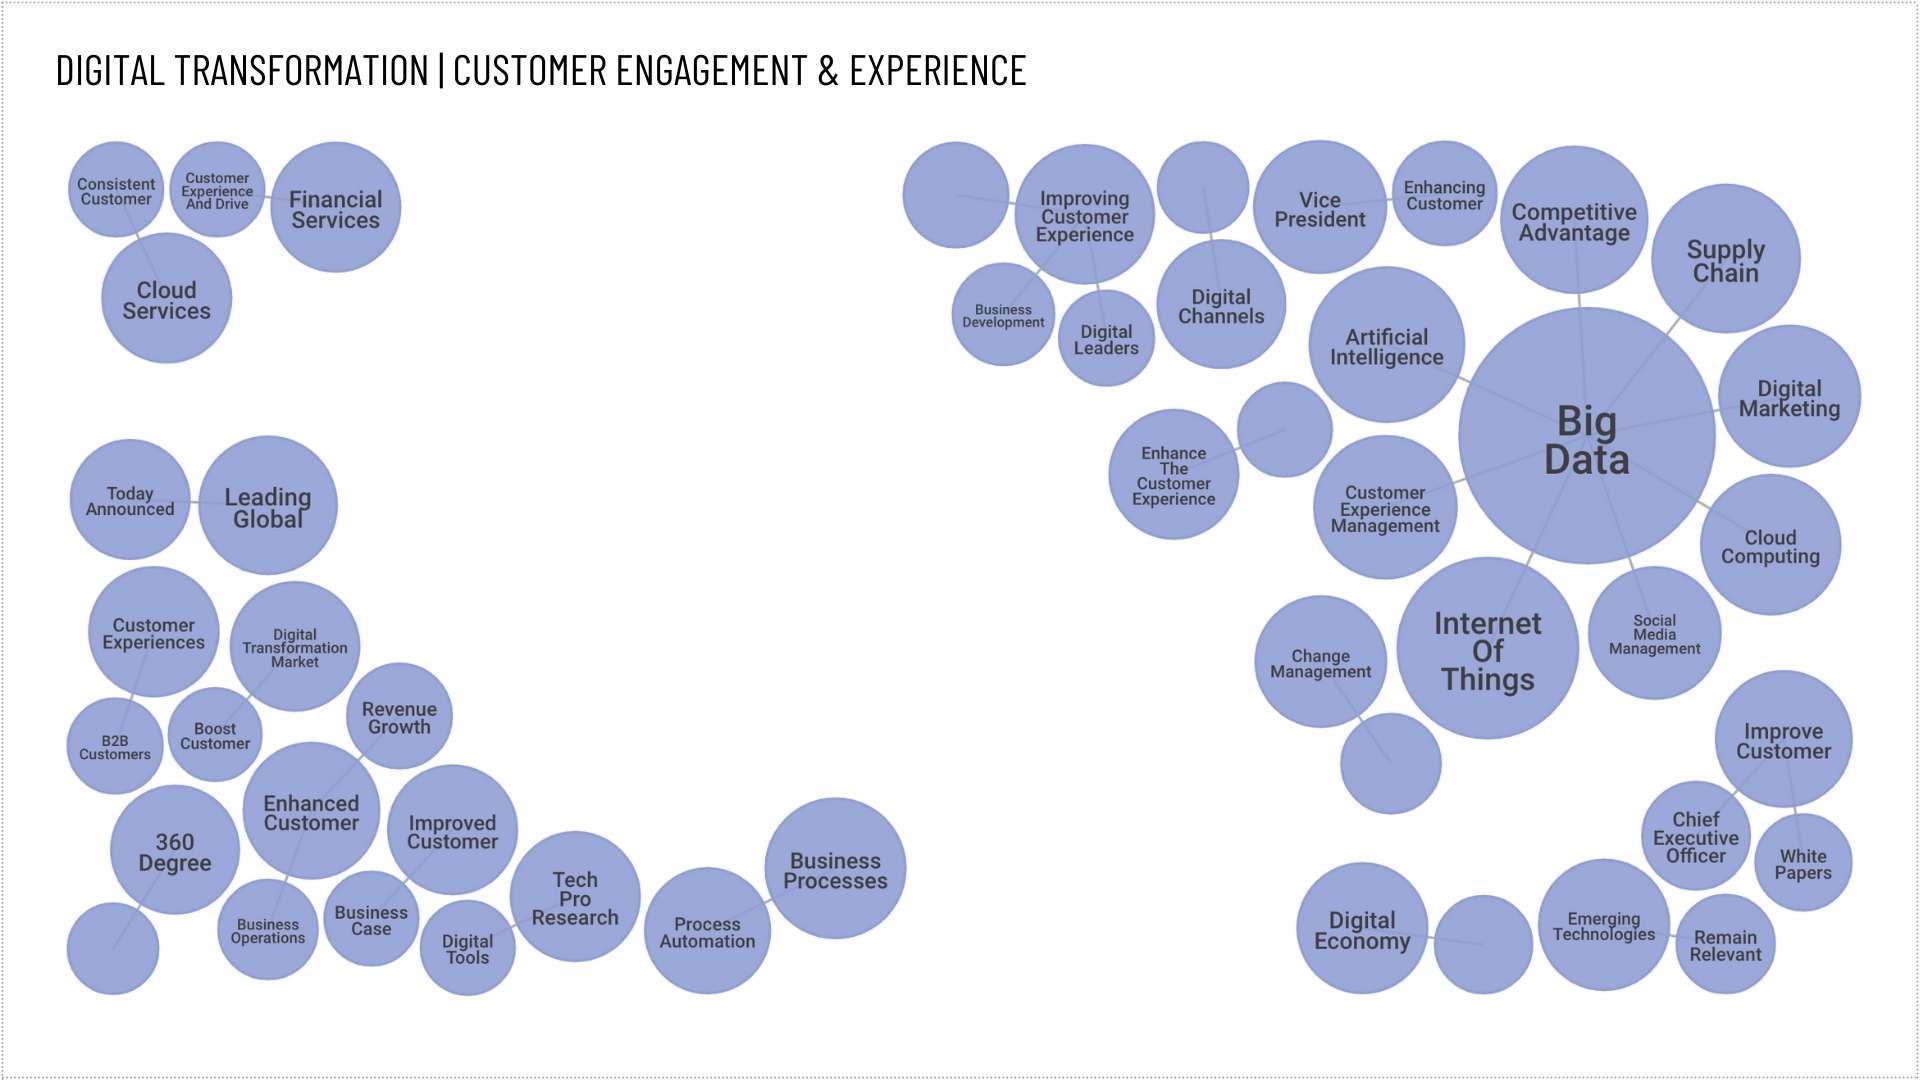 Customer Experience Analysis